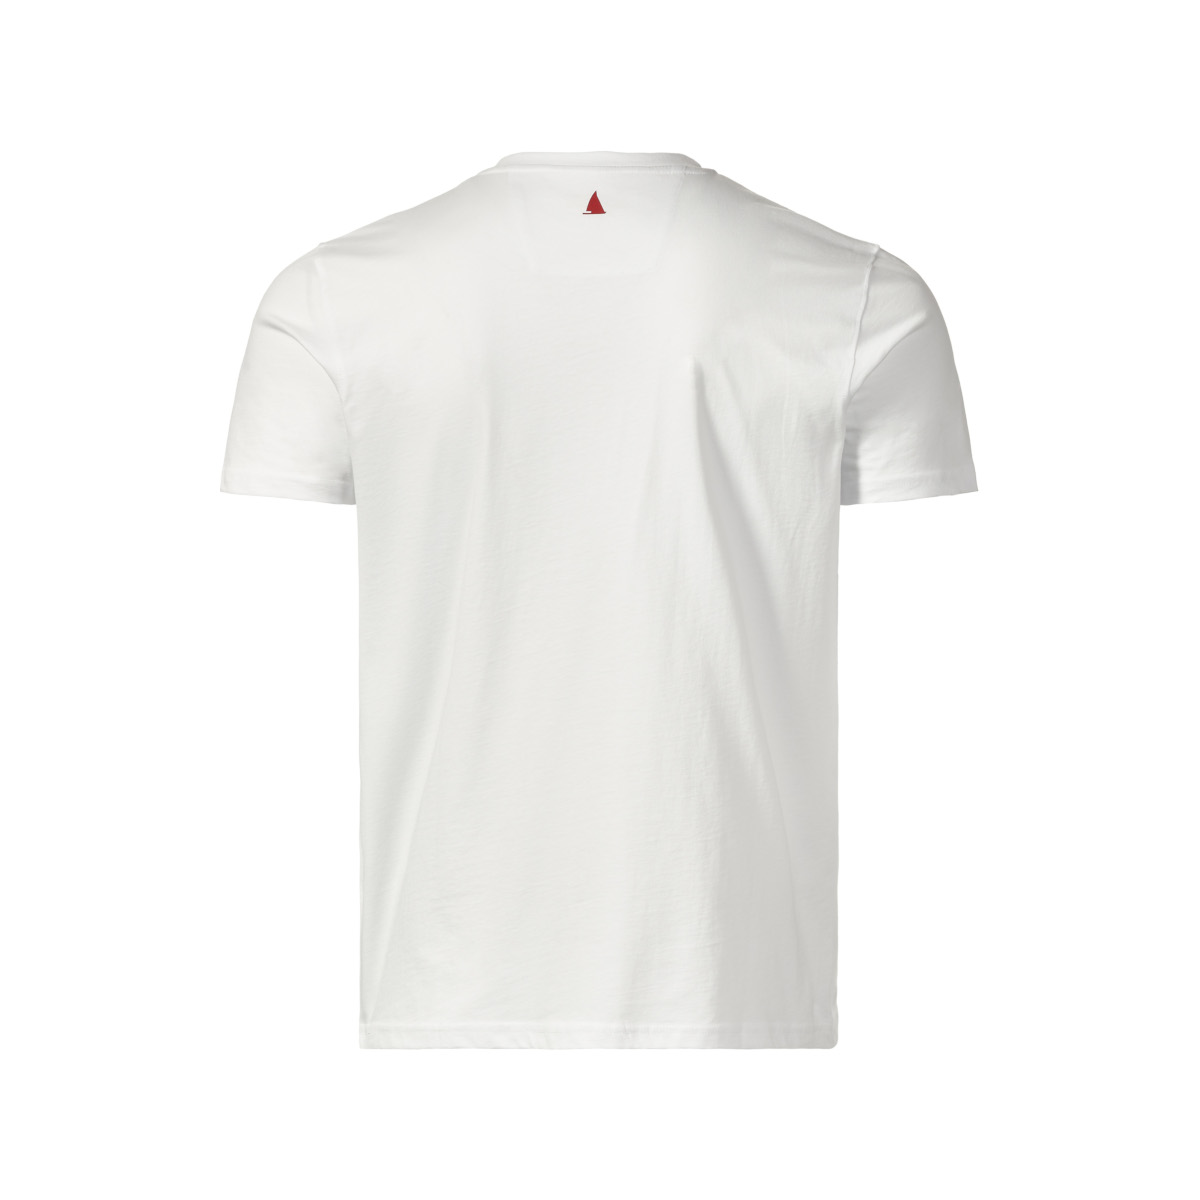 Musto Sardinia Graphic T-shirt homme blanc, taille XXL